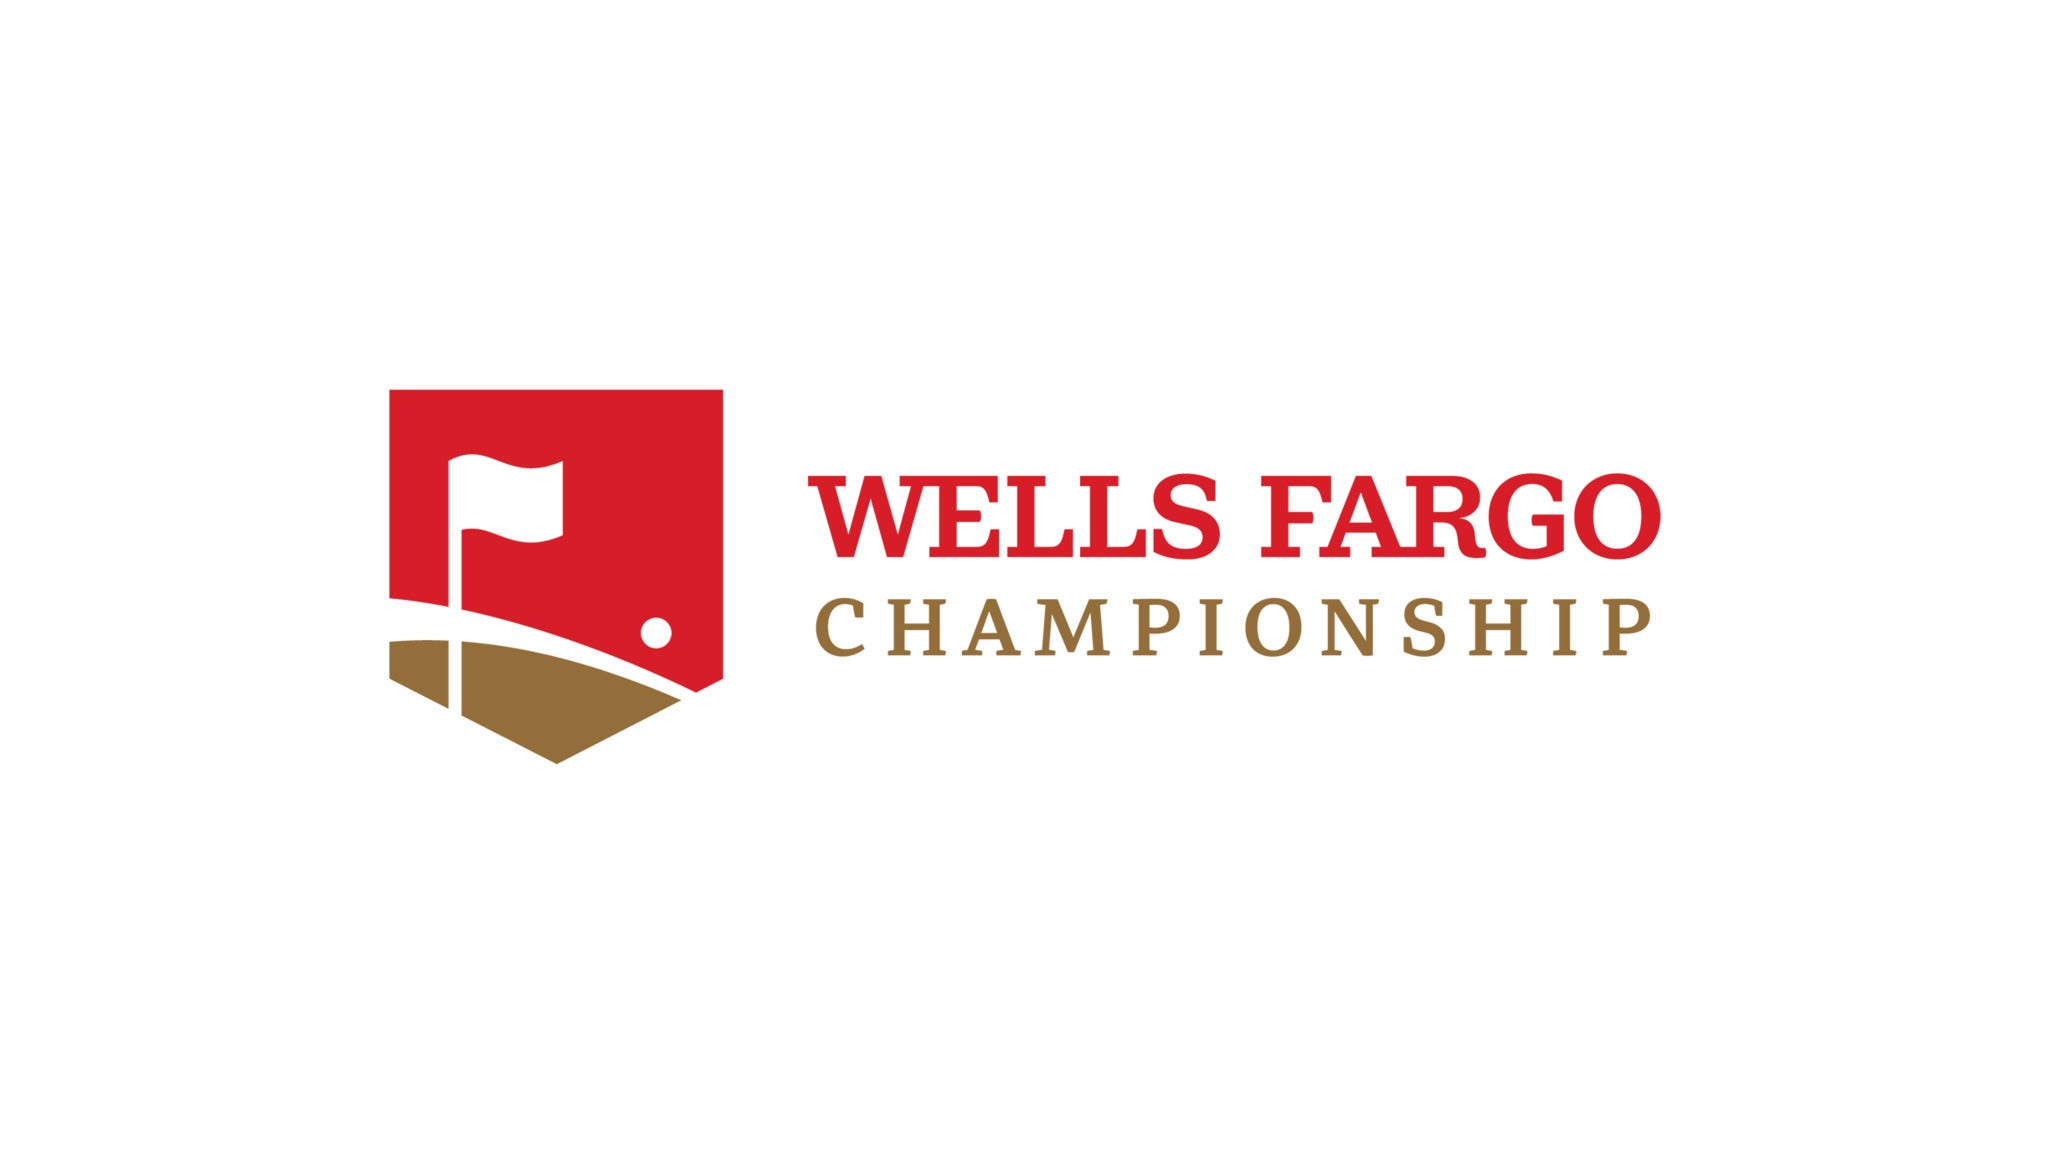 Sunday Wells Fargo Championship in Potomac promo photo for Wells Fargo Championship presale offer code